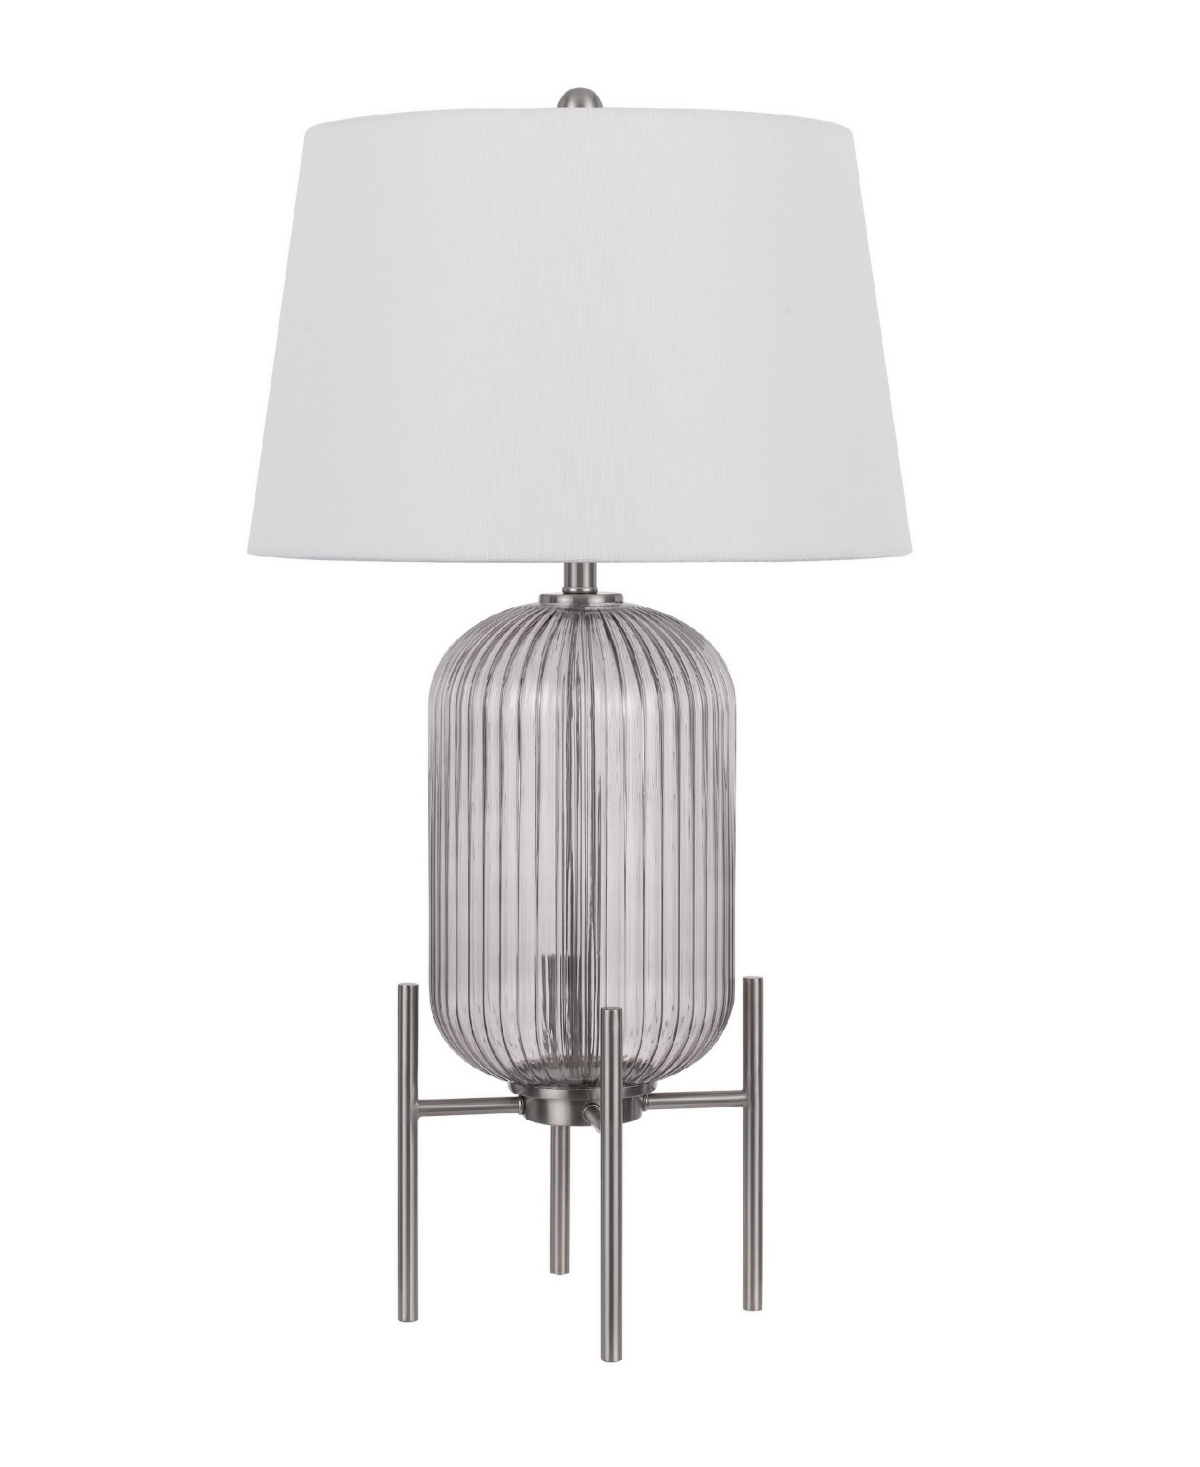 Cal Lighting 32.5" Height Metal Table Lamp In Brushed Steel